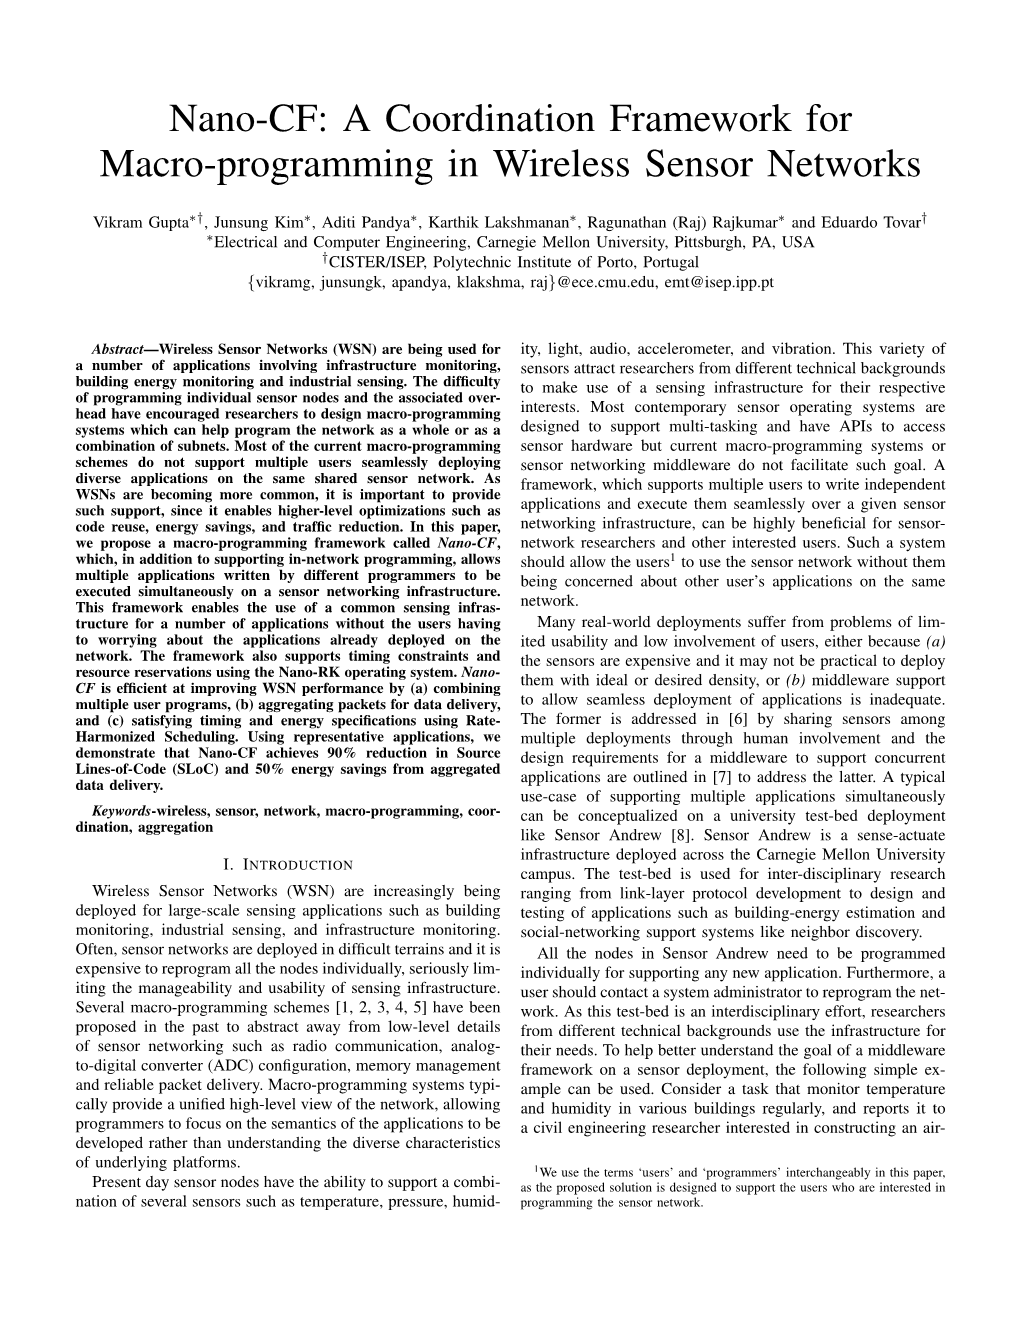 Nano-CF: a Coordination Framework for Macro-Programming in Wireless Sensor Networks